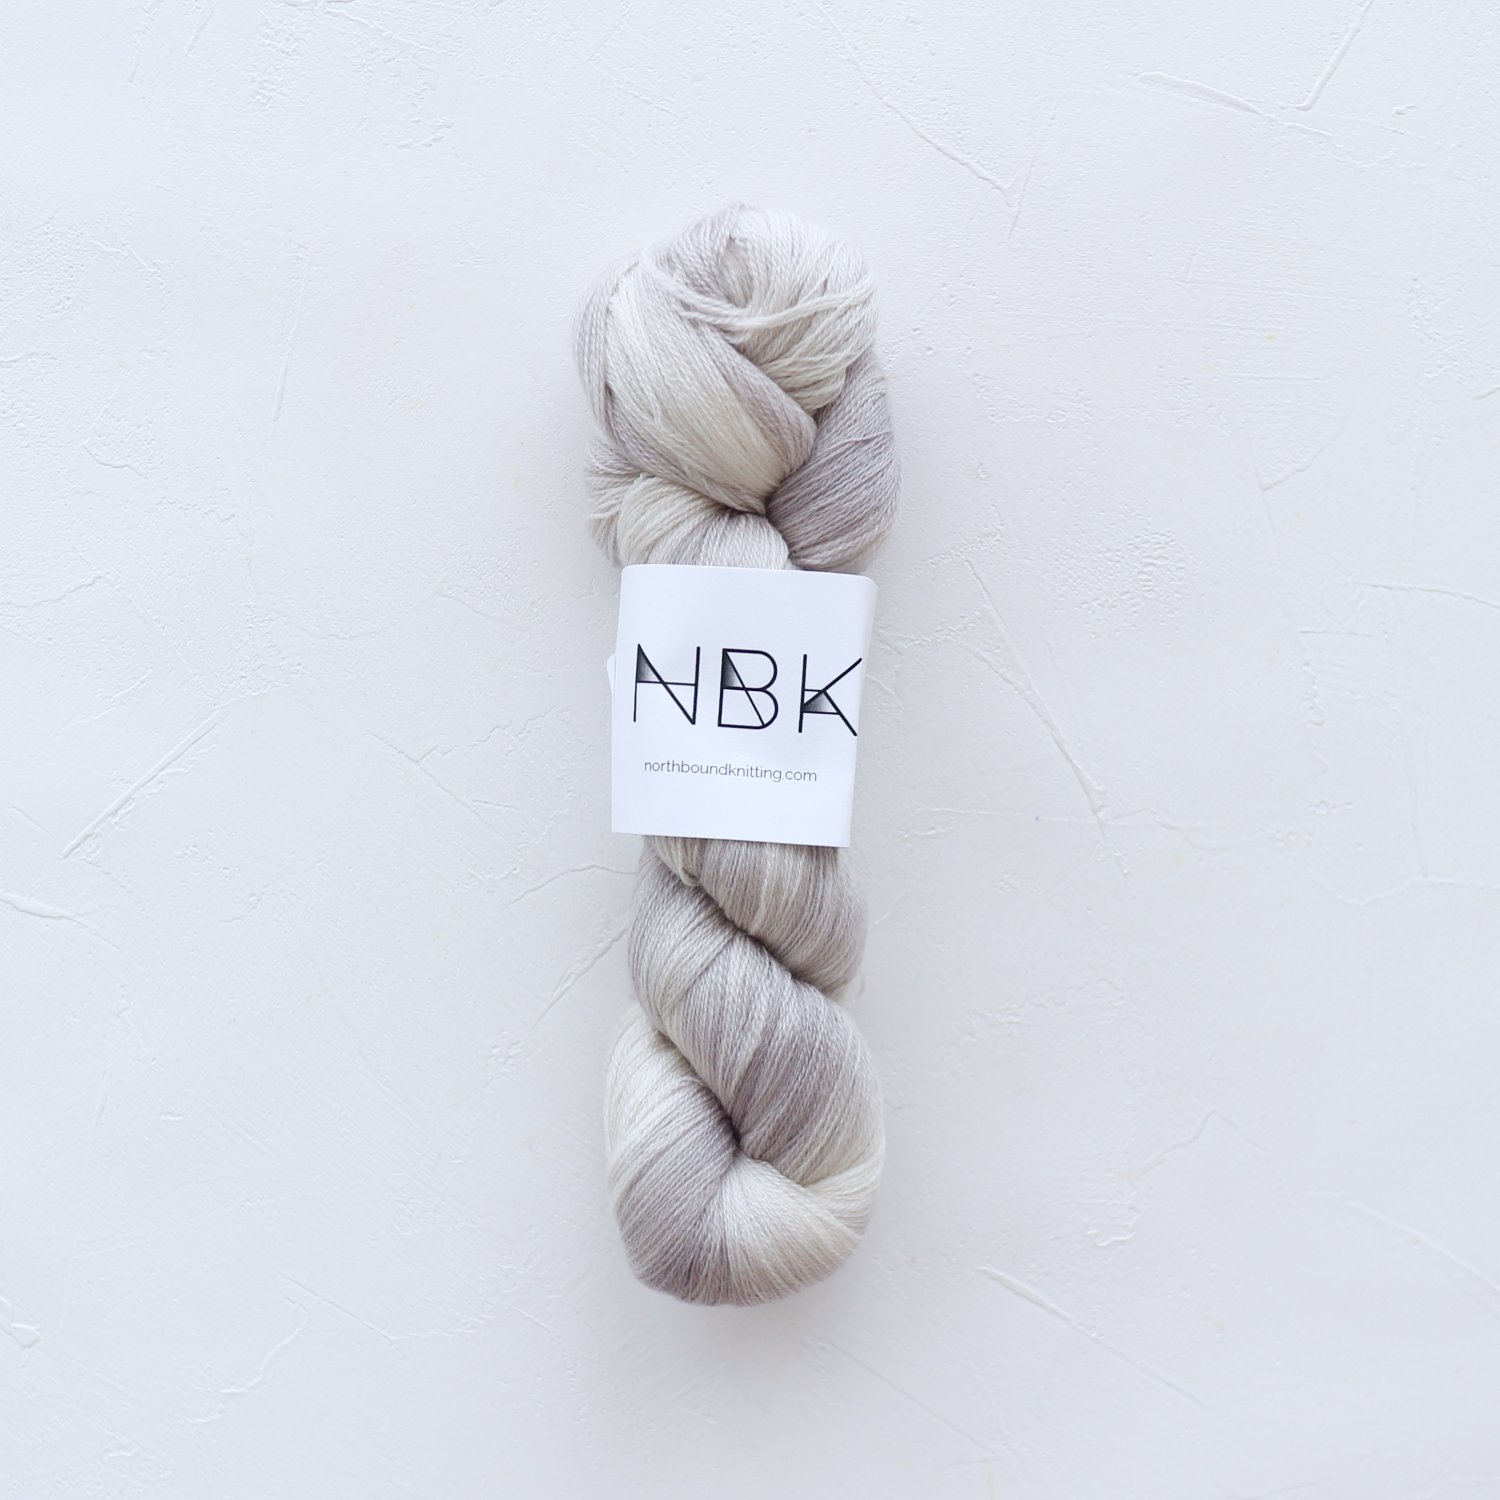 【Northbound Knitting】<br>Superwash Merino Lace<br>ASH